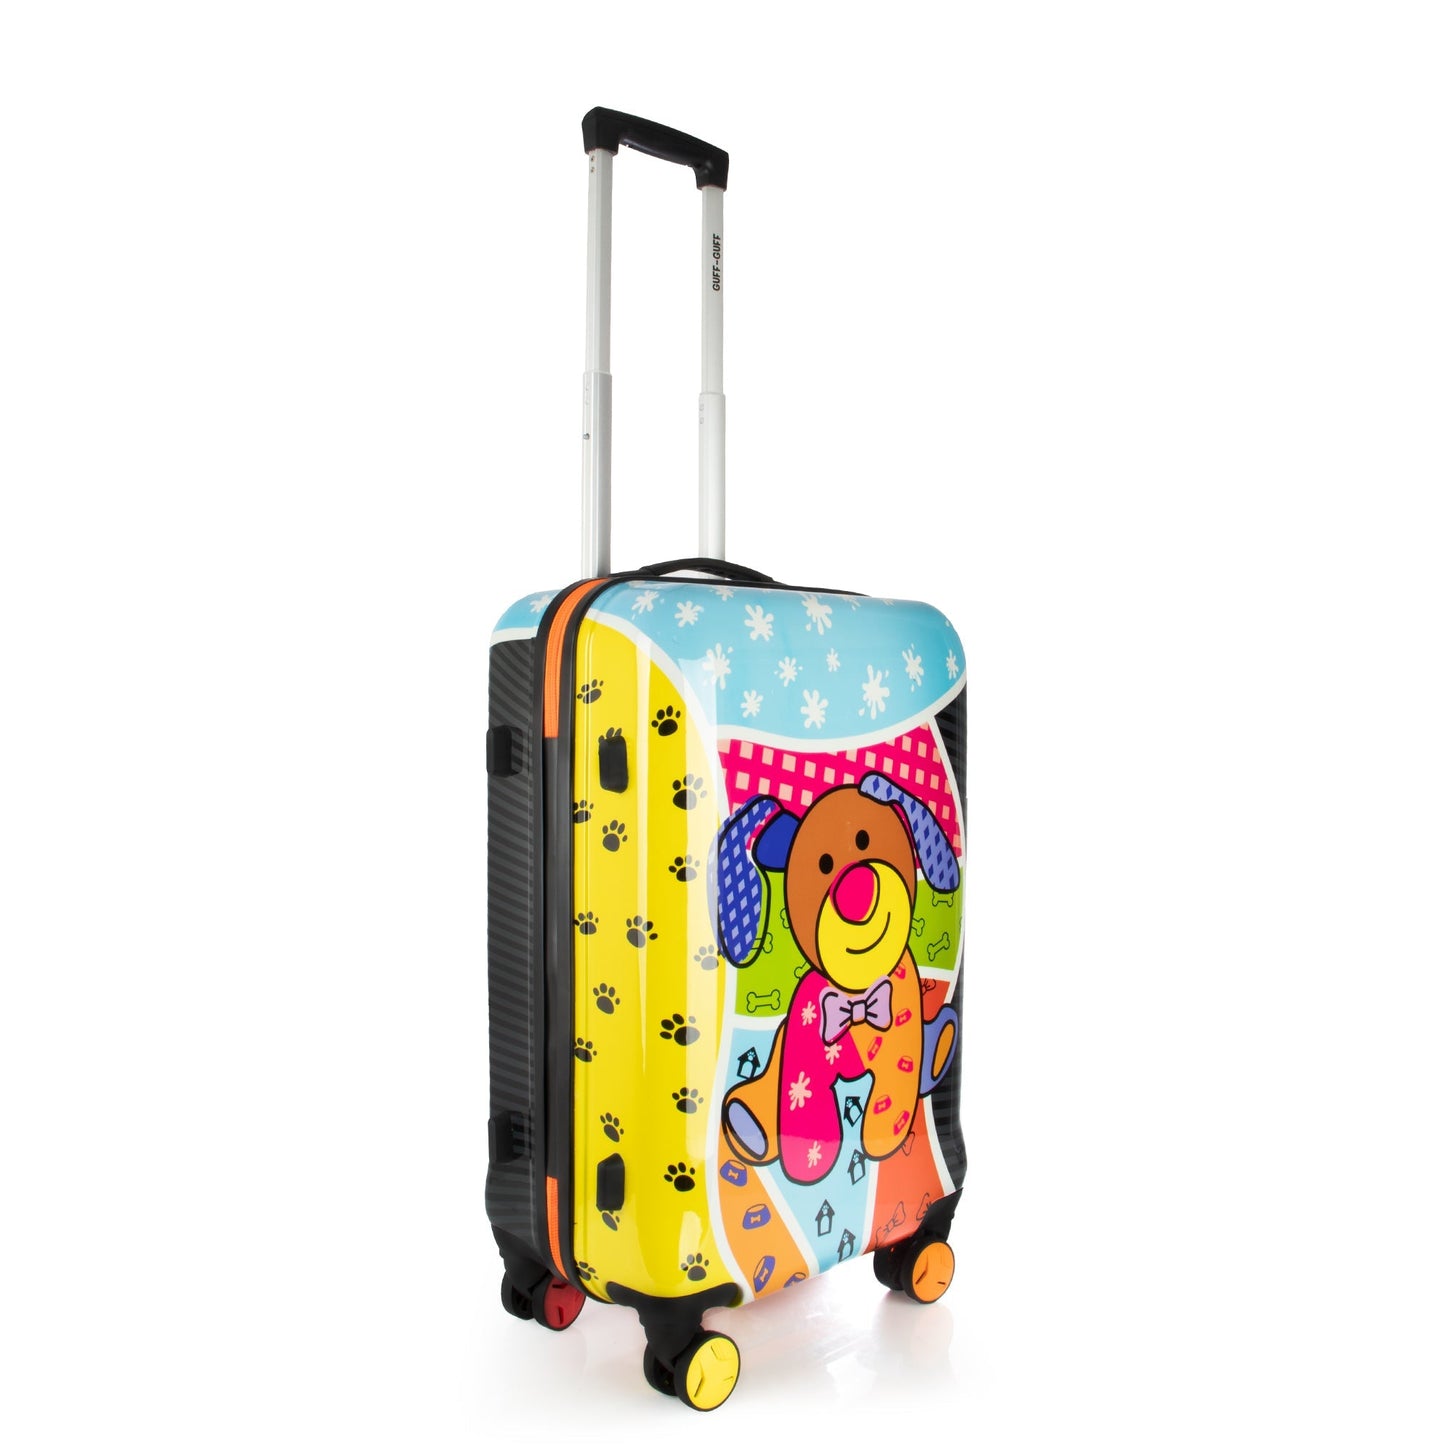 GUFF - GUFF Collection Rainbow Luggage 3 Piece Set